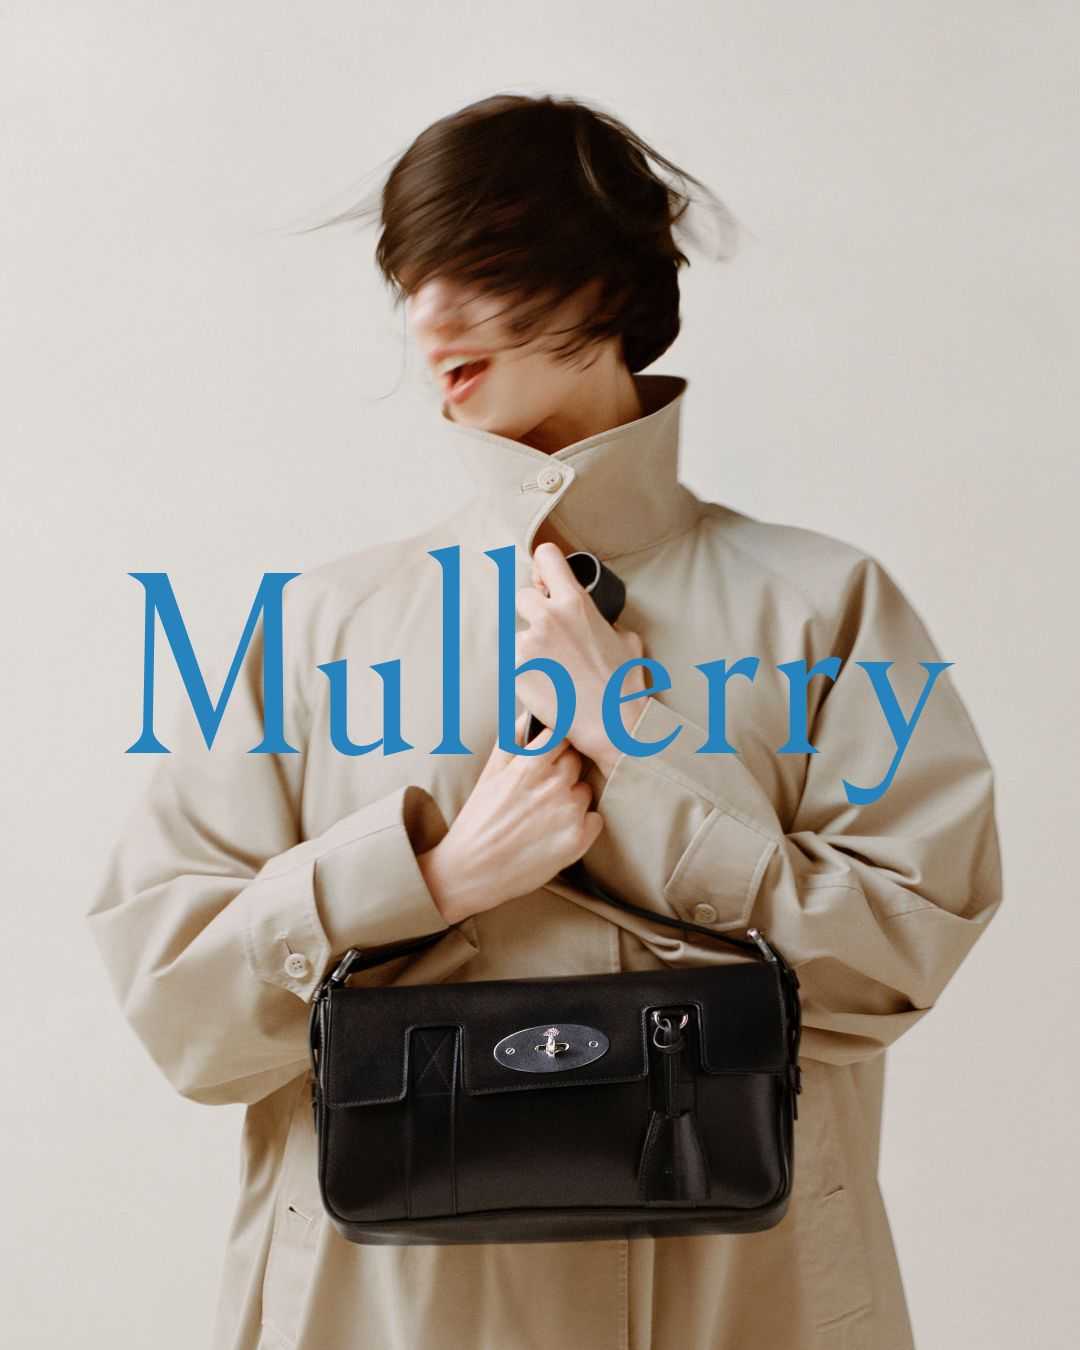 Mulberry - Ronan Mckenzie - 4859